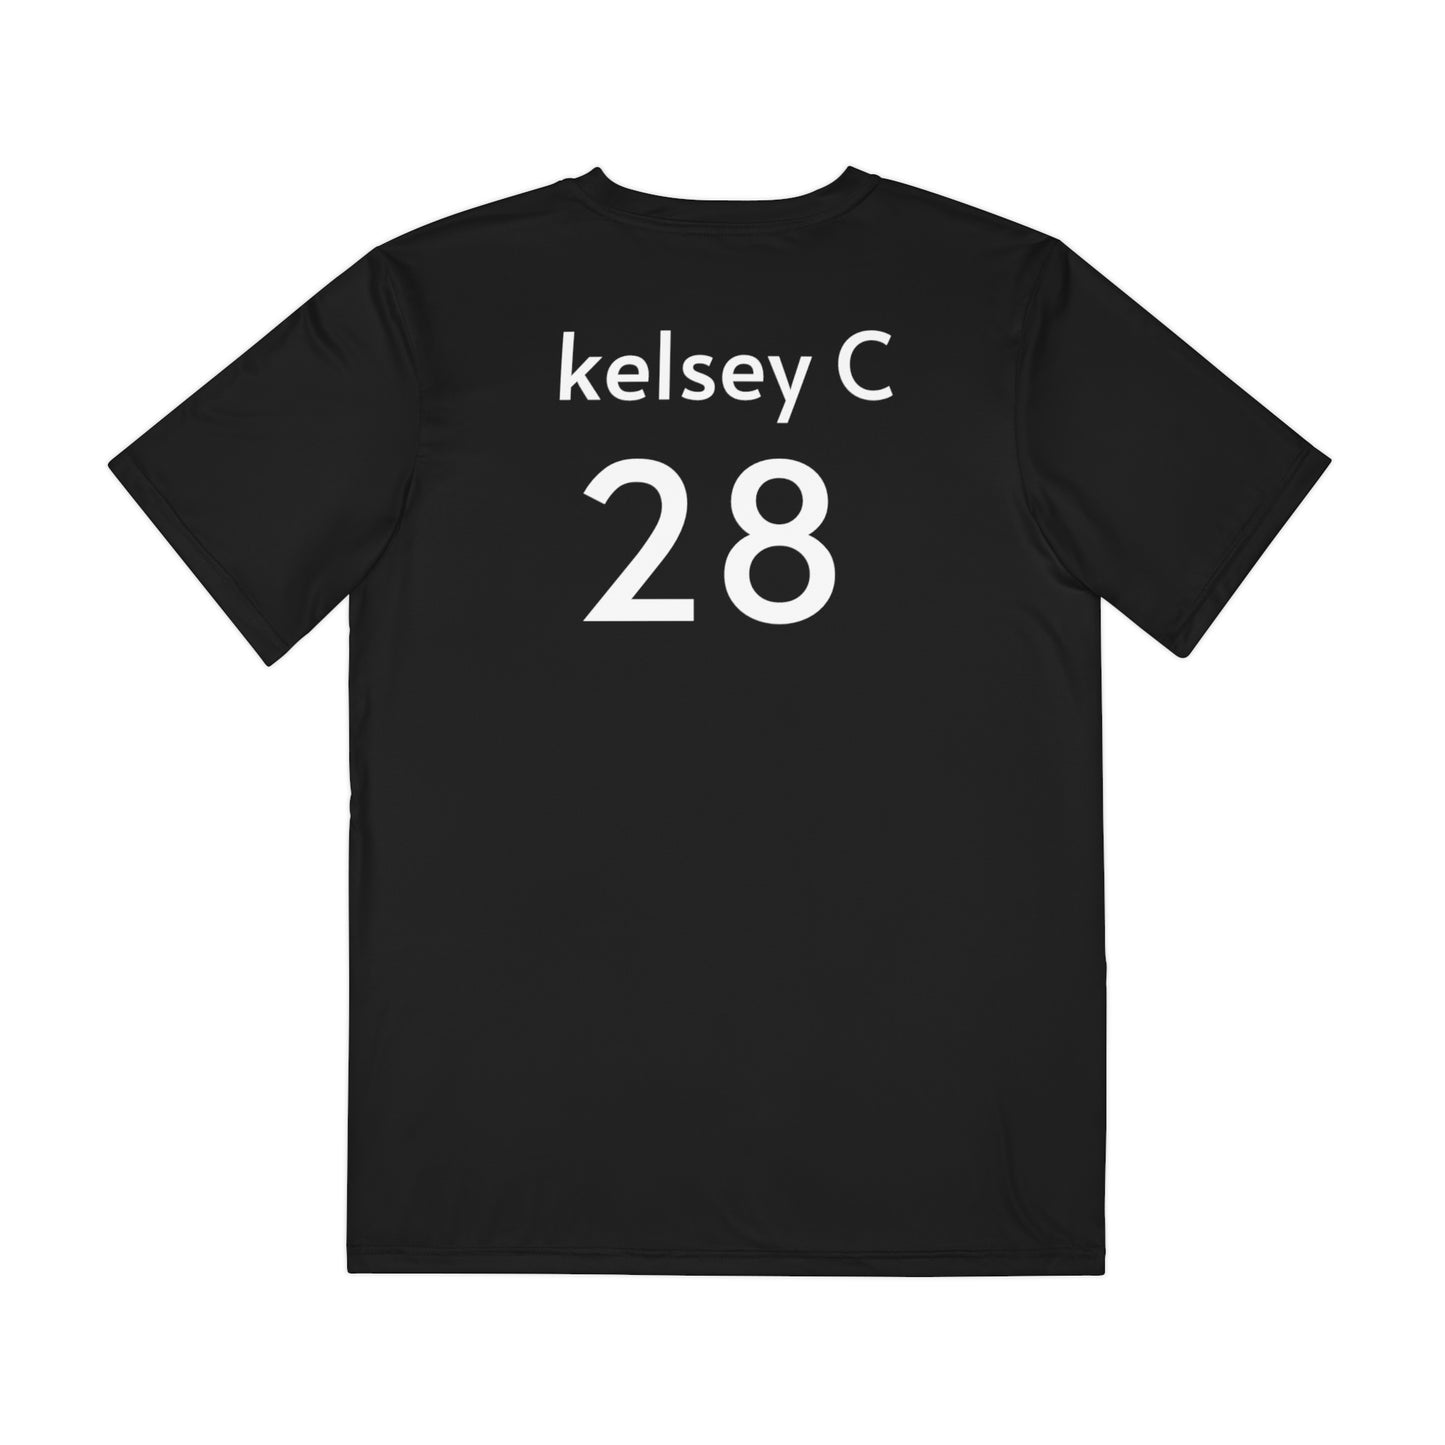 Kelsey C Team Shirt